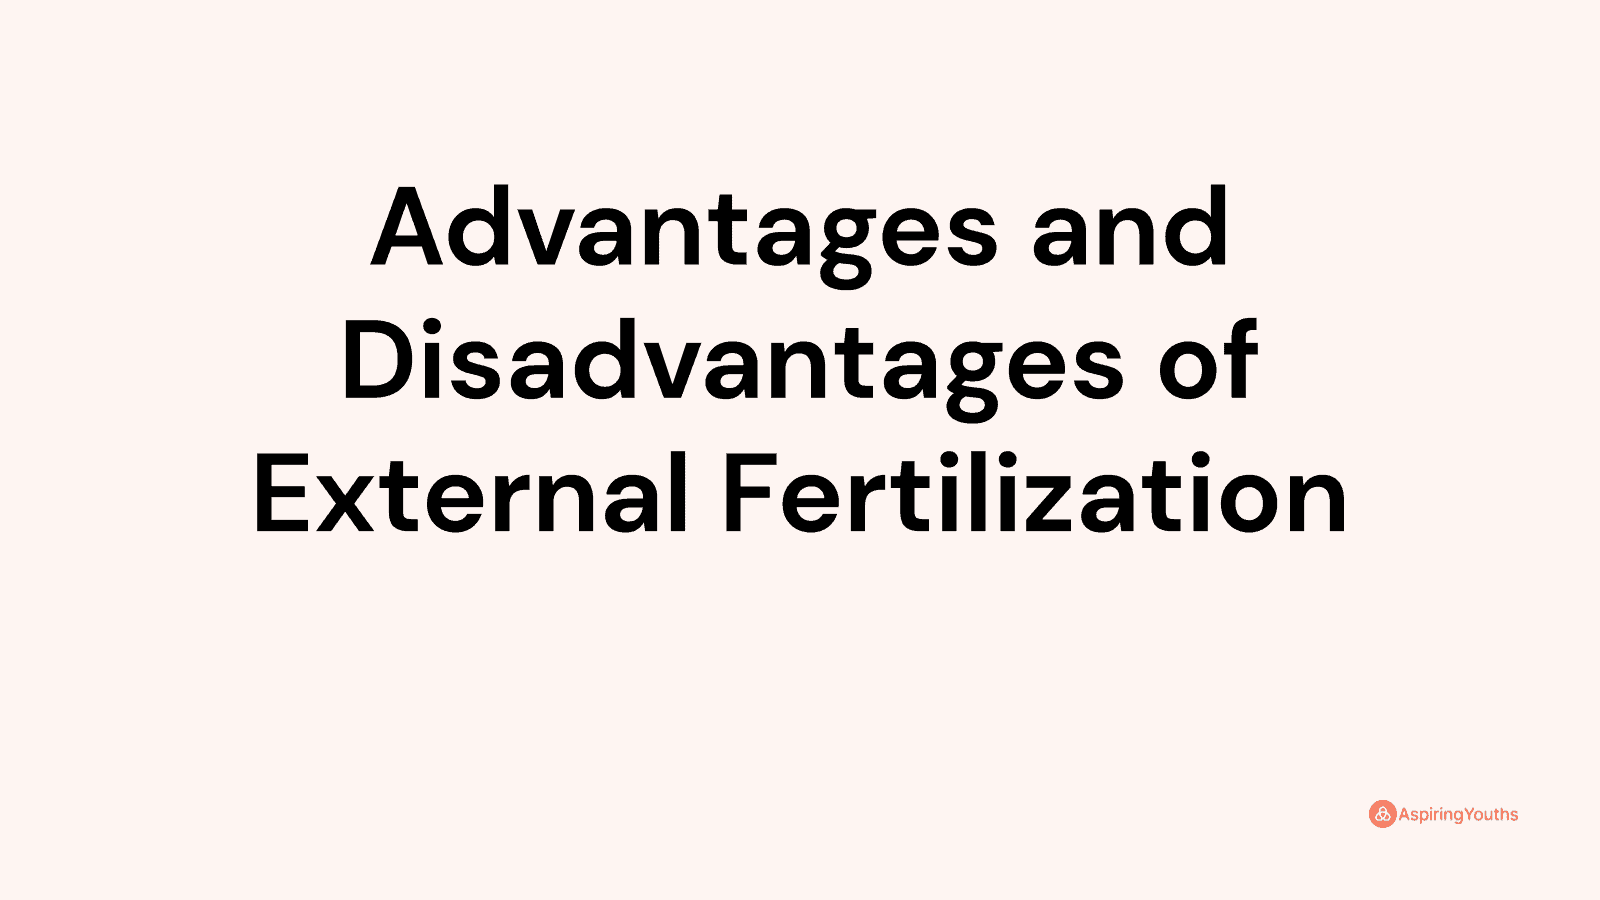 Advantages and disadvantages of External Fertilization